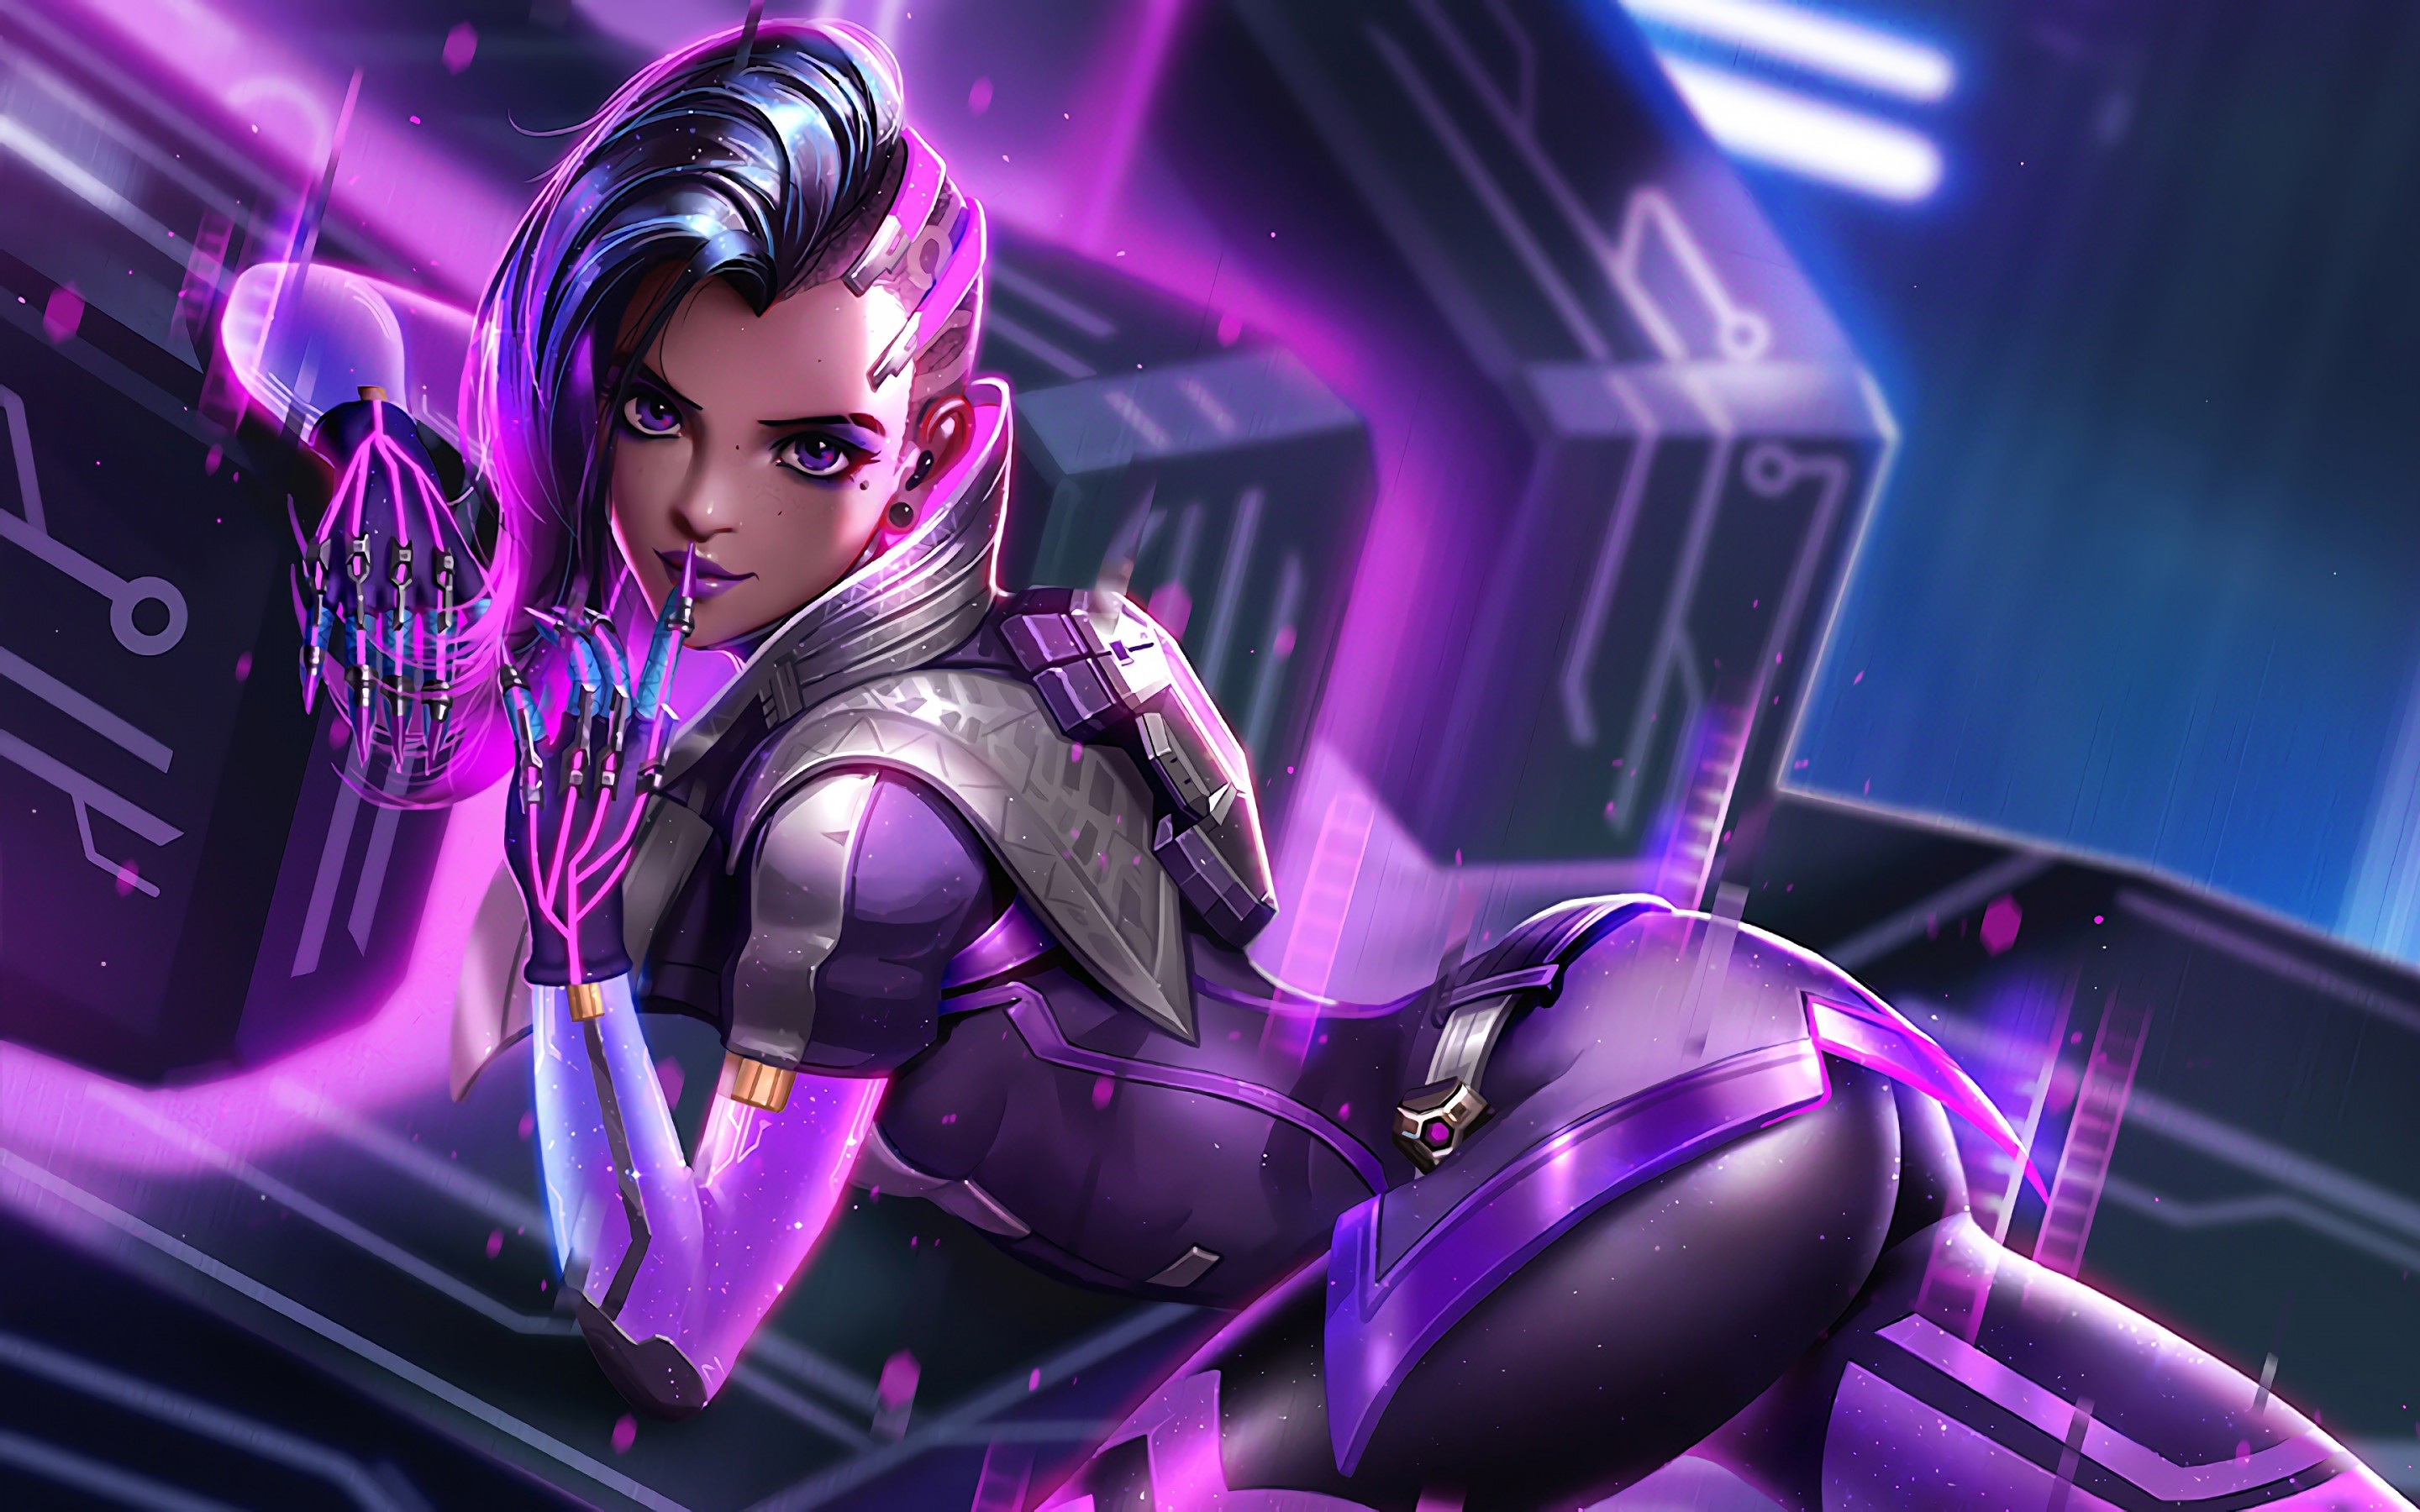 General 2880x1800 Overwatch Sombra (Overwatch) ass futuristic PC gaming dark hair purple blue pink Jason Liang